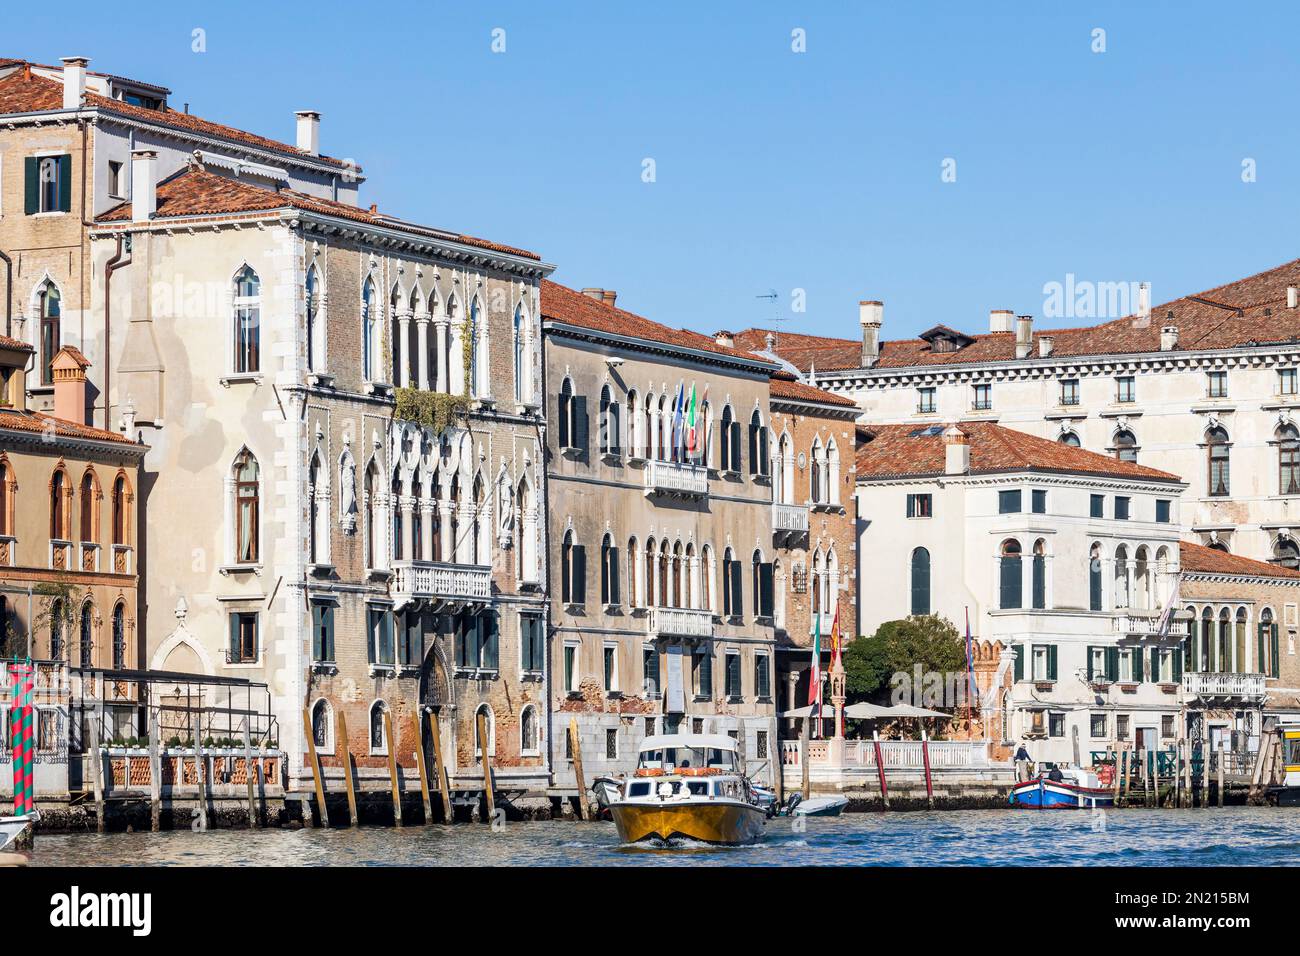 Palazzi lining Canal Grande with alilaguna airport transfer boat, Grand Canal, Venice, Veneto, Italy, Europe Stock Photo